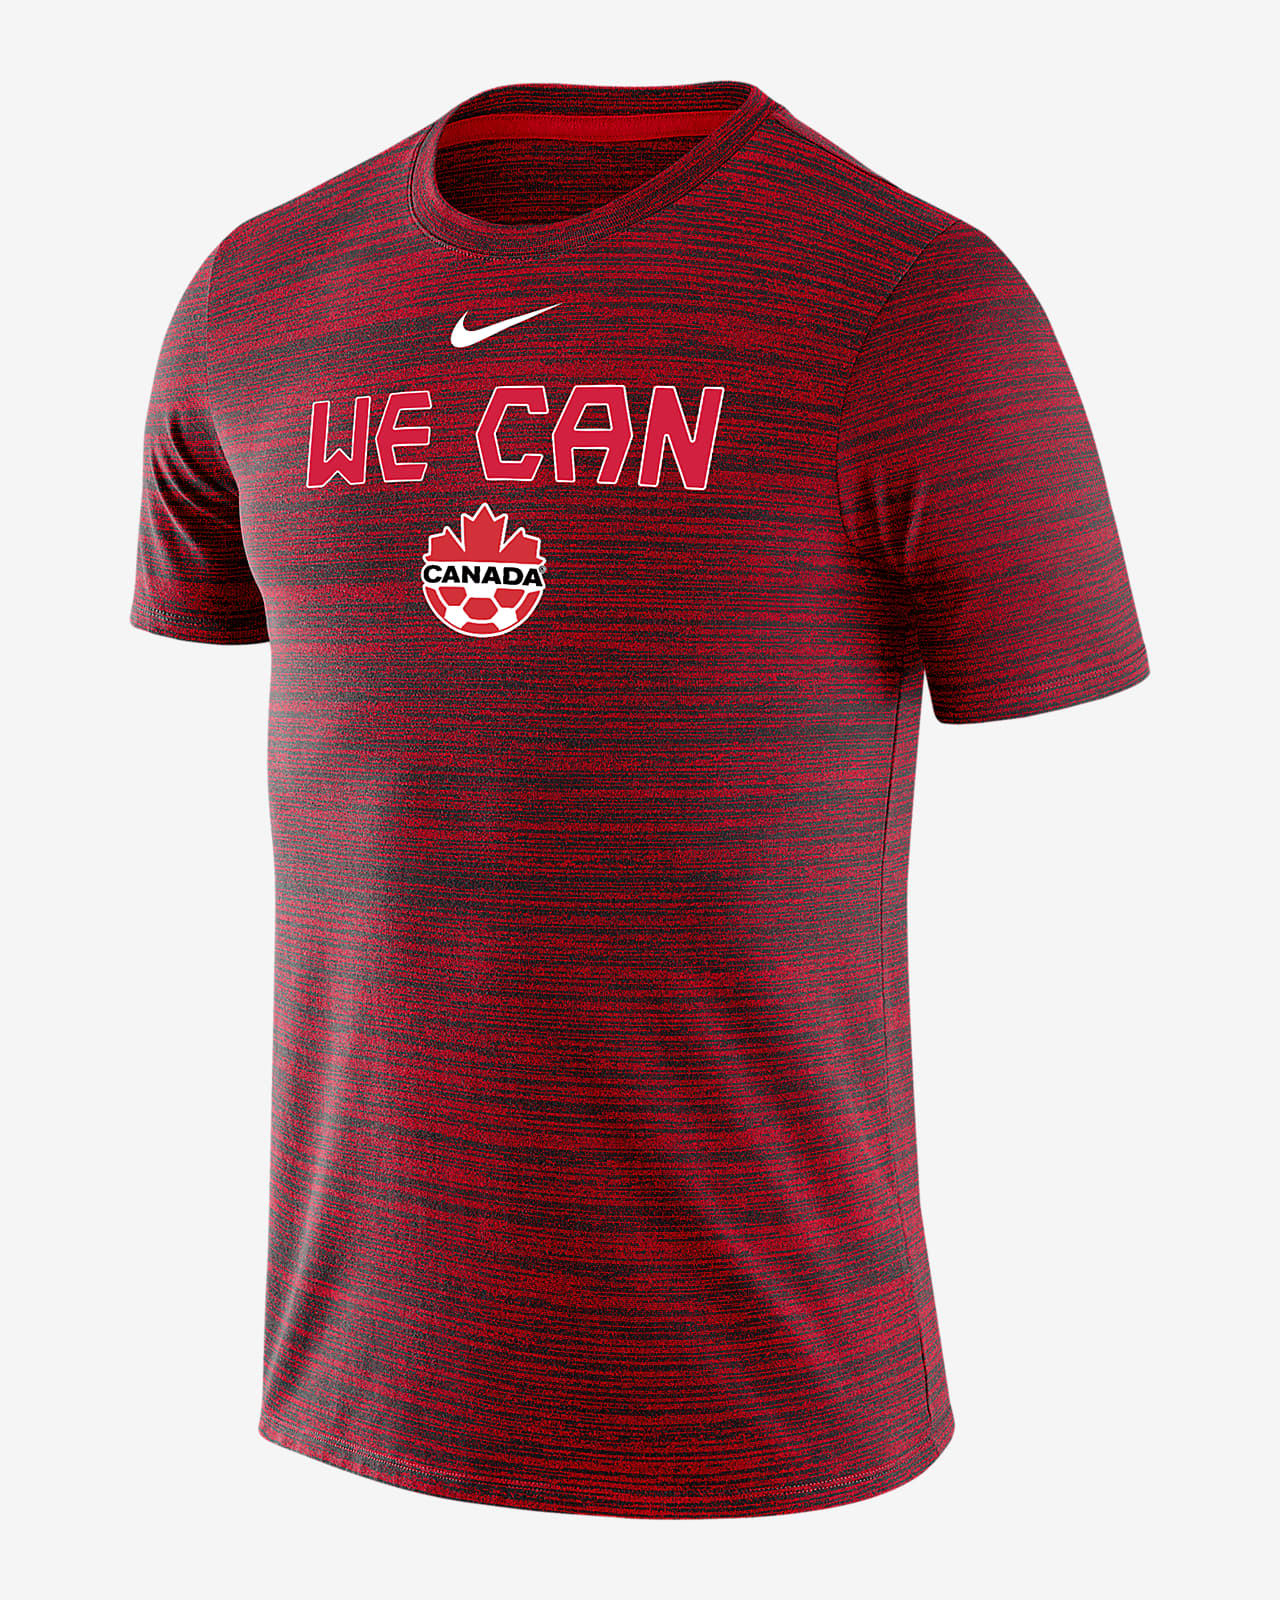 Canada Velocity Legend Men's Nike Soccer T-Shirt